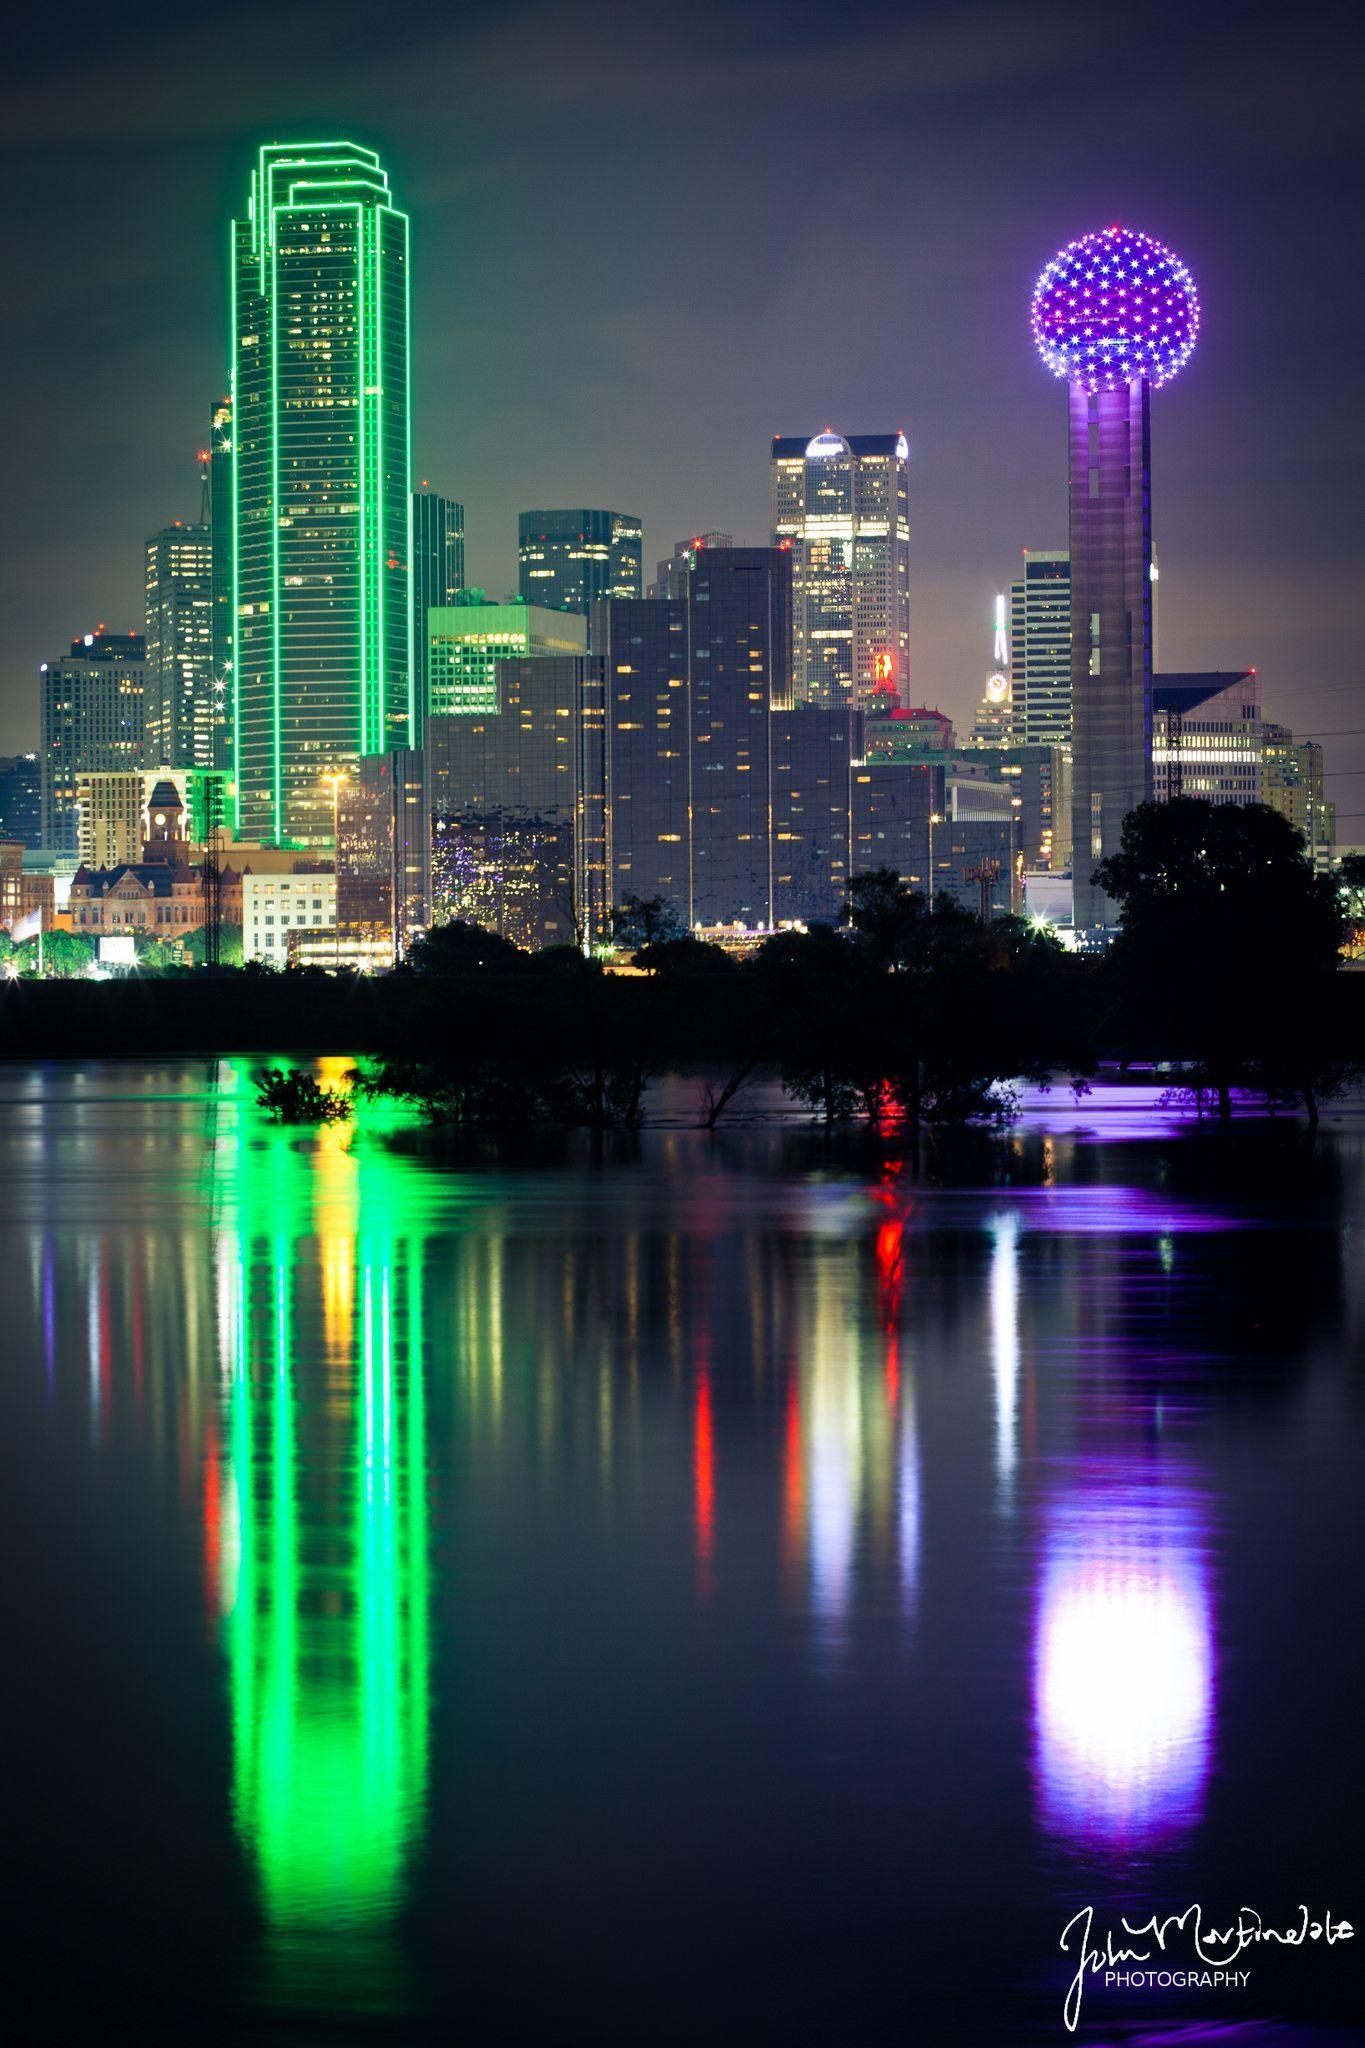 Dallas Texas Wallpapers - Top Free Dallas Texas Backgrounds ...